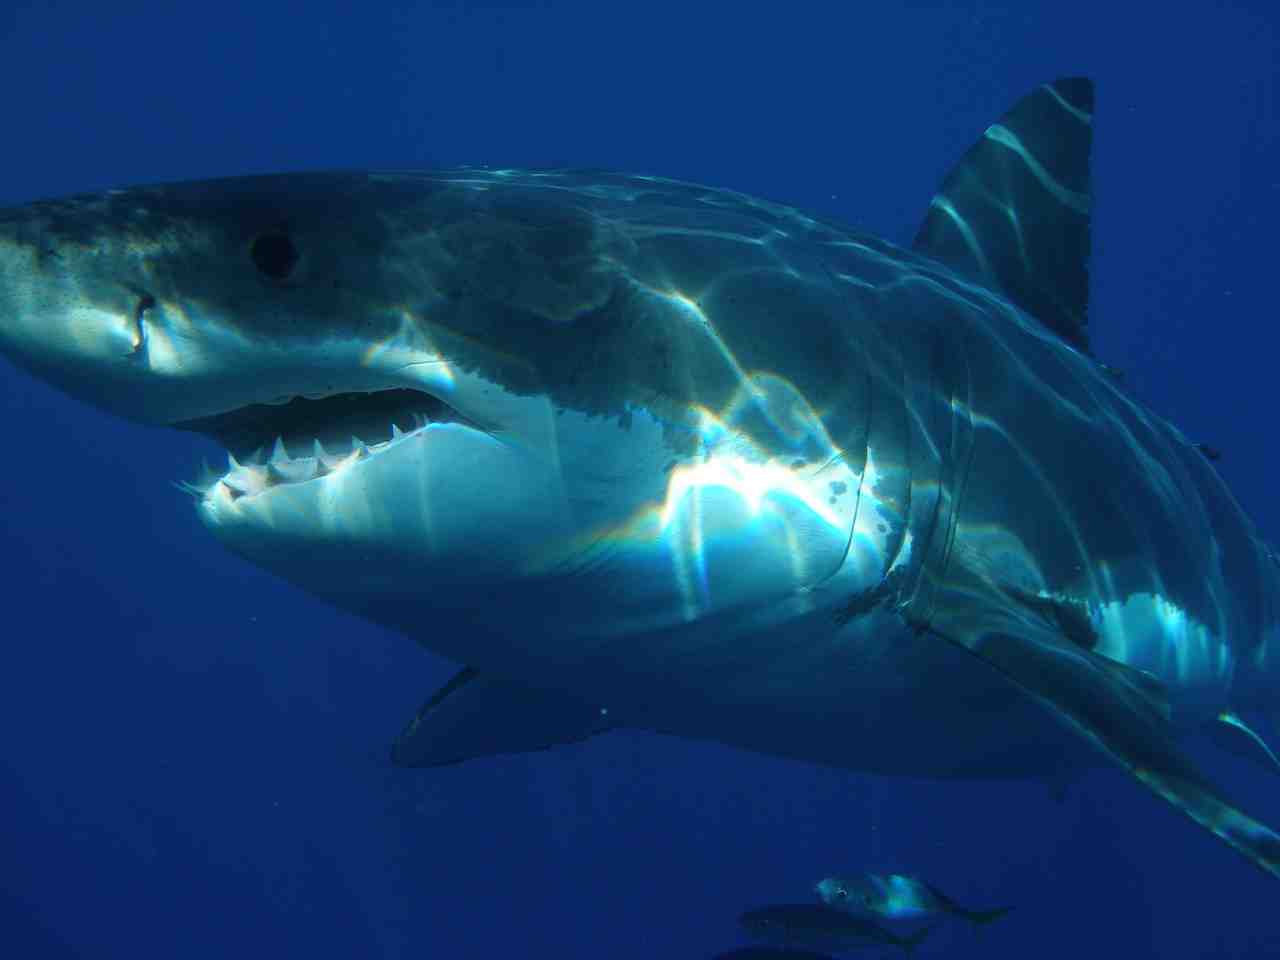 grand requin blanc, requin, mâchoires